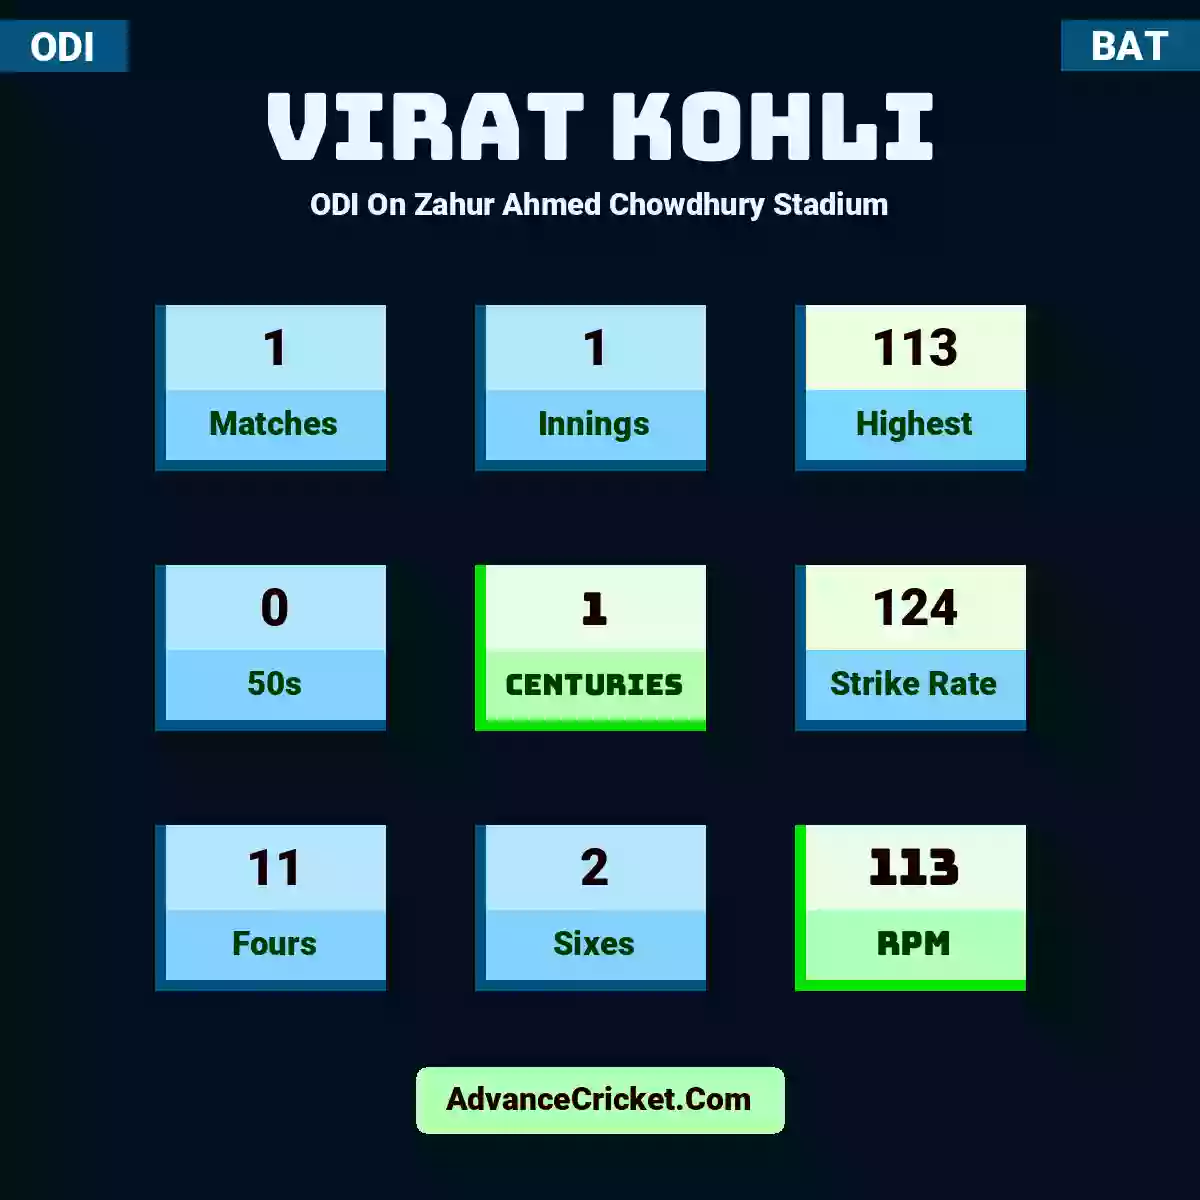 Virat Kohli ODI  On Zahur Ahmed Chowdhury Stadium, Virat Kohli played 1 matches, scored 113 runs as highest, 0 half-centuries, and 1 centuries, with a strike rate of 124. V.Kohli hit 11 fours and 2 sixes, with an RPM of 113.